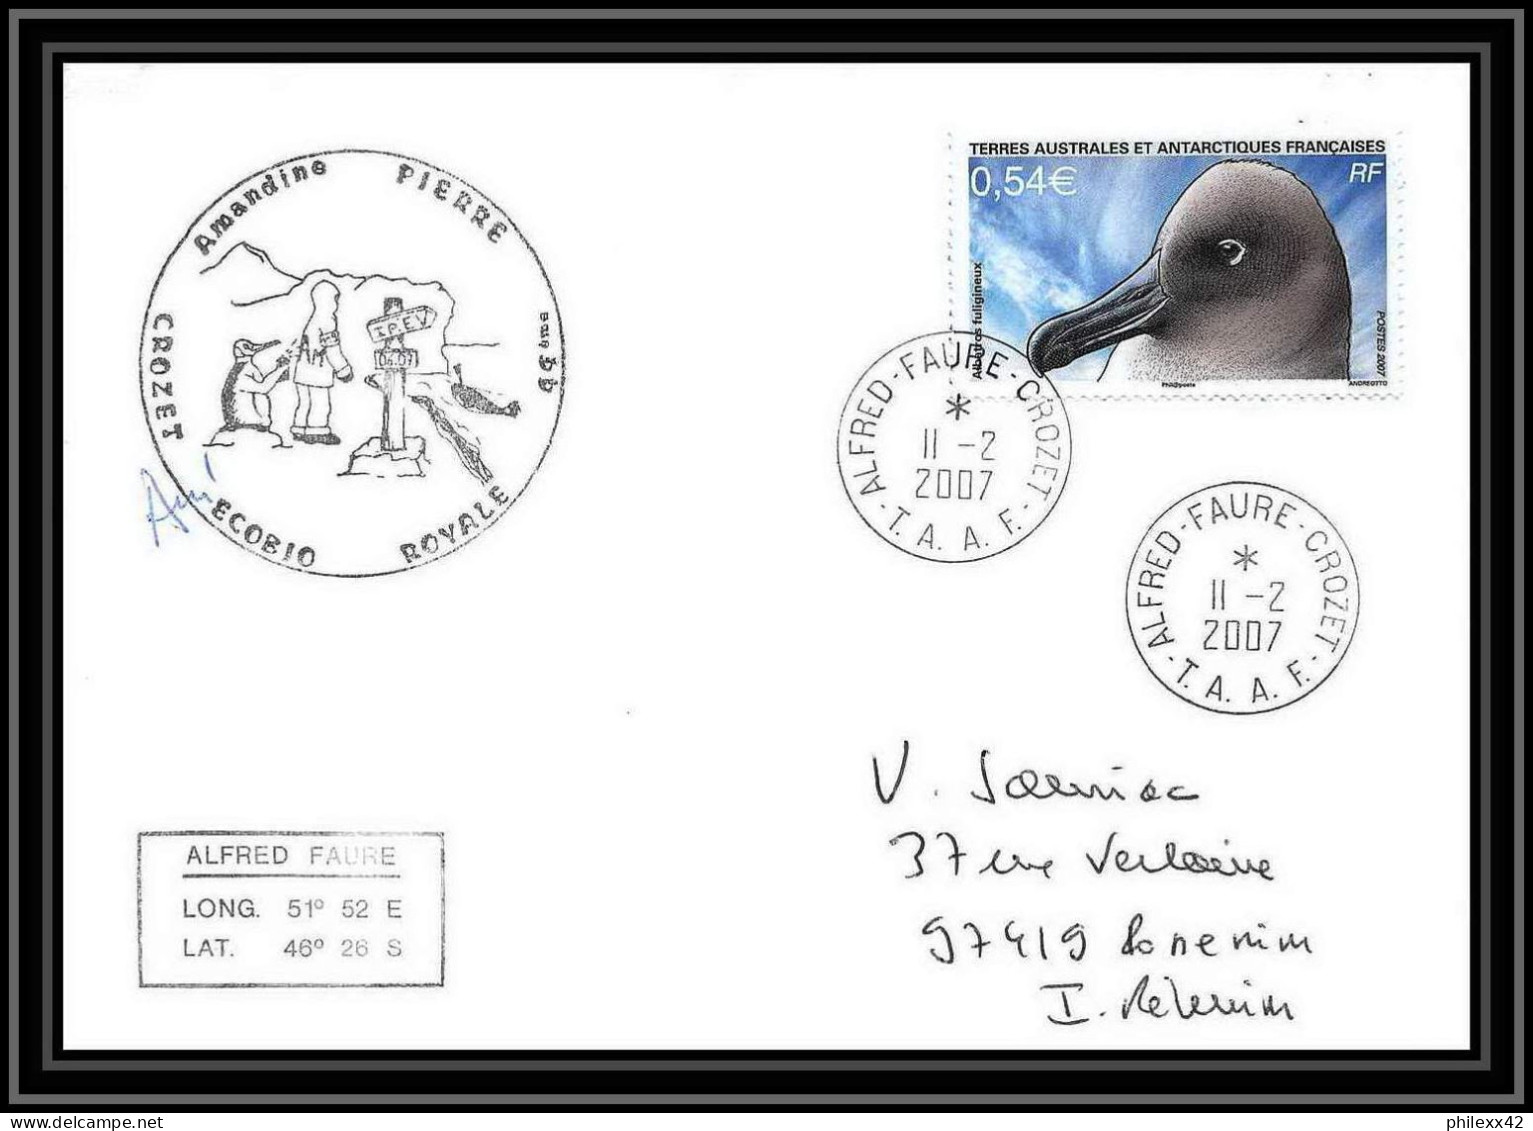 2660 ANTARCTIC TAAF Lettre Cover Dufresne 2 Signé Signed N°468 Crozet Ecobuo Royale 2007 Reunion Oiseaux (birds) - Spedizioni Antartiche